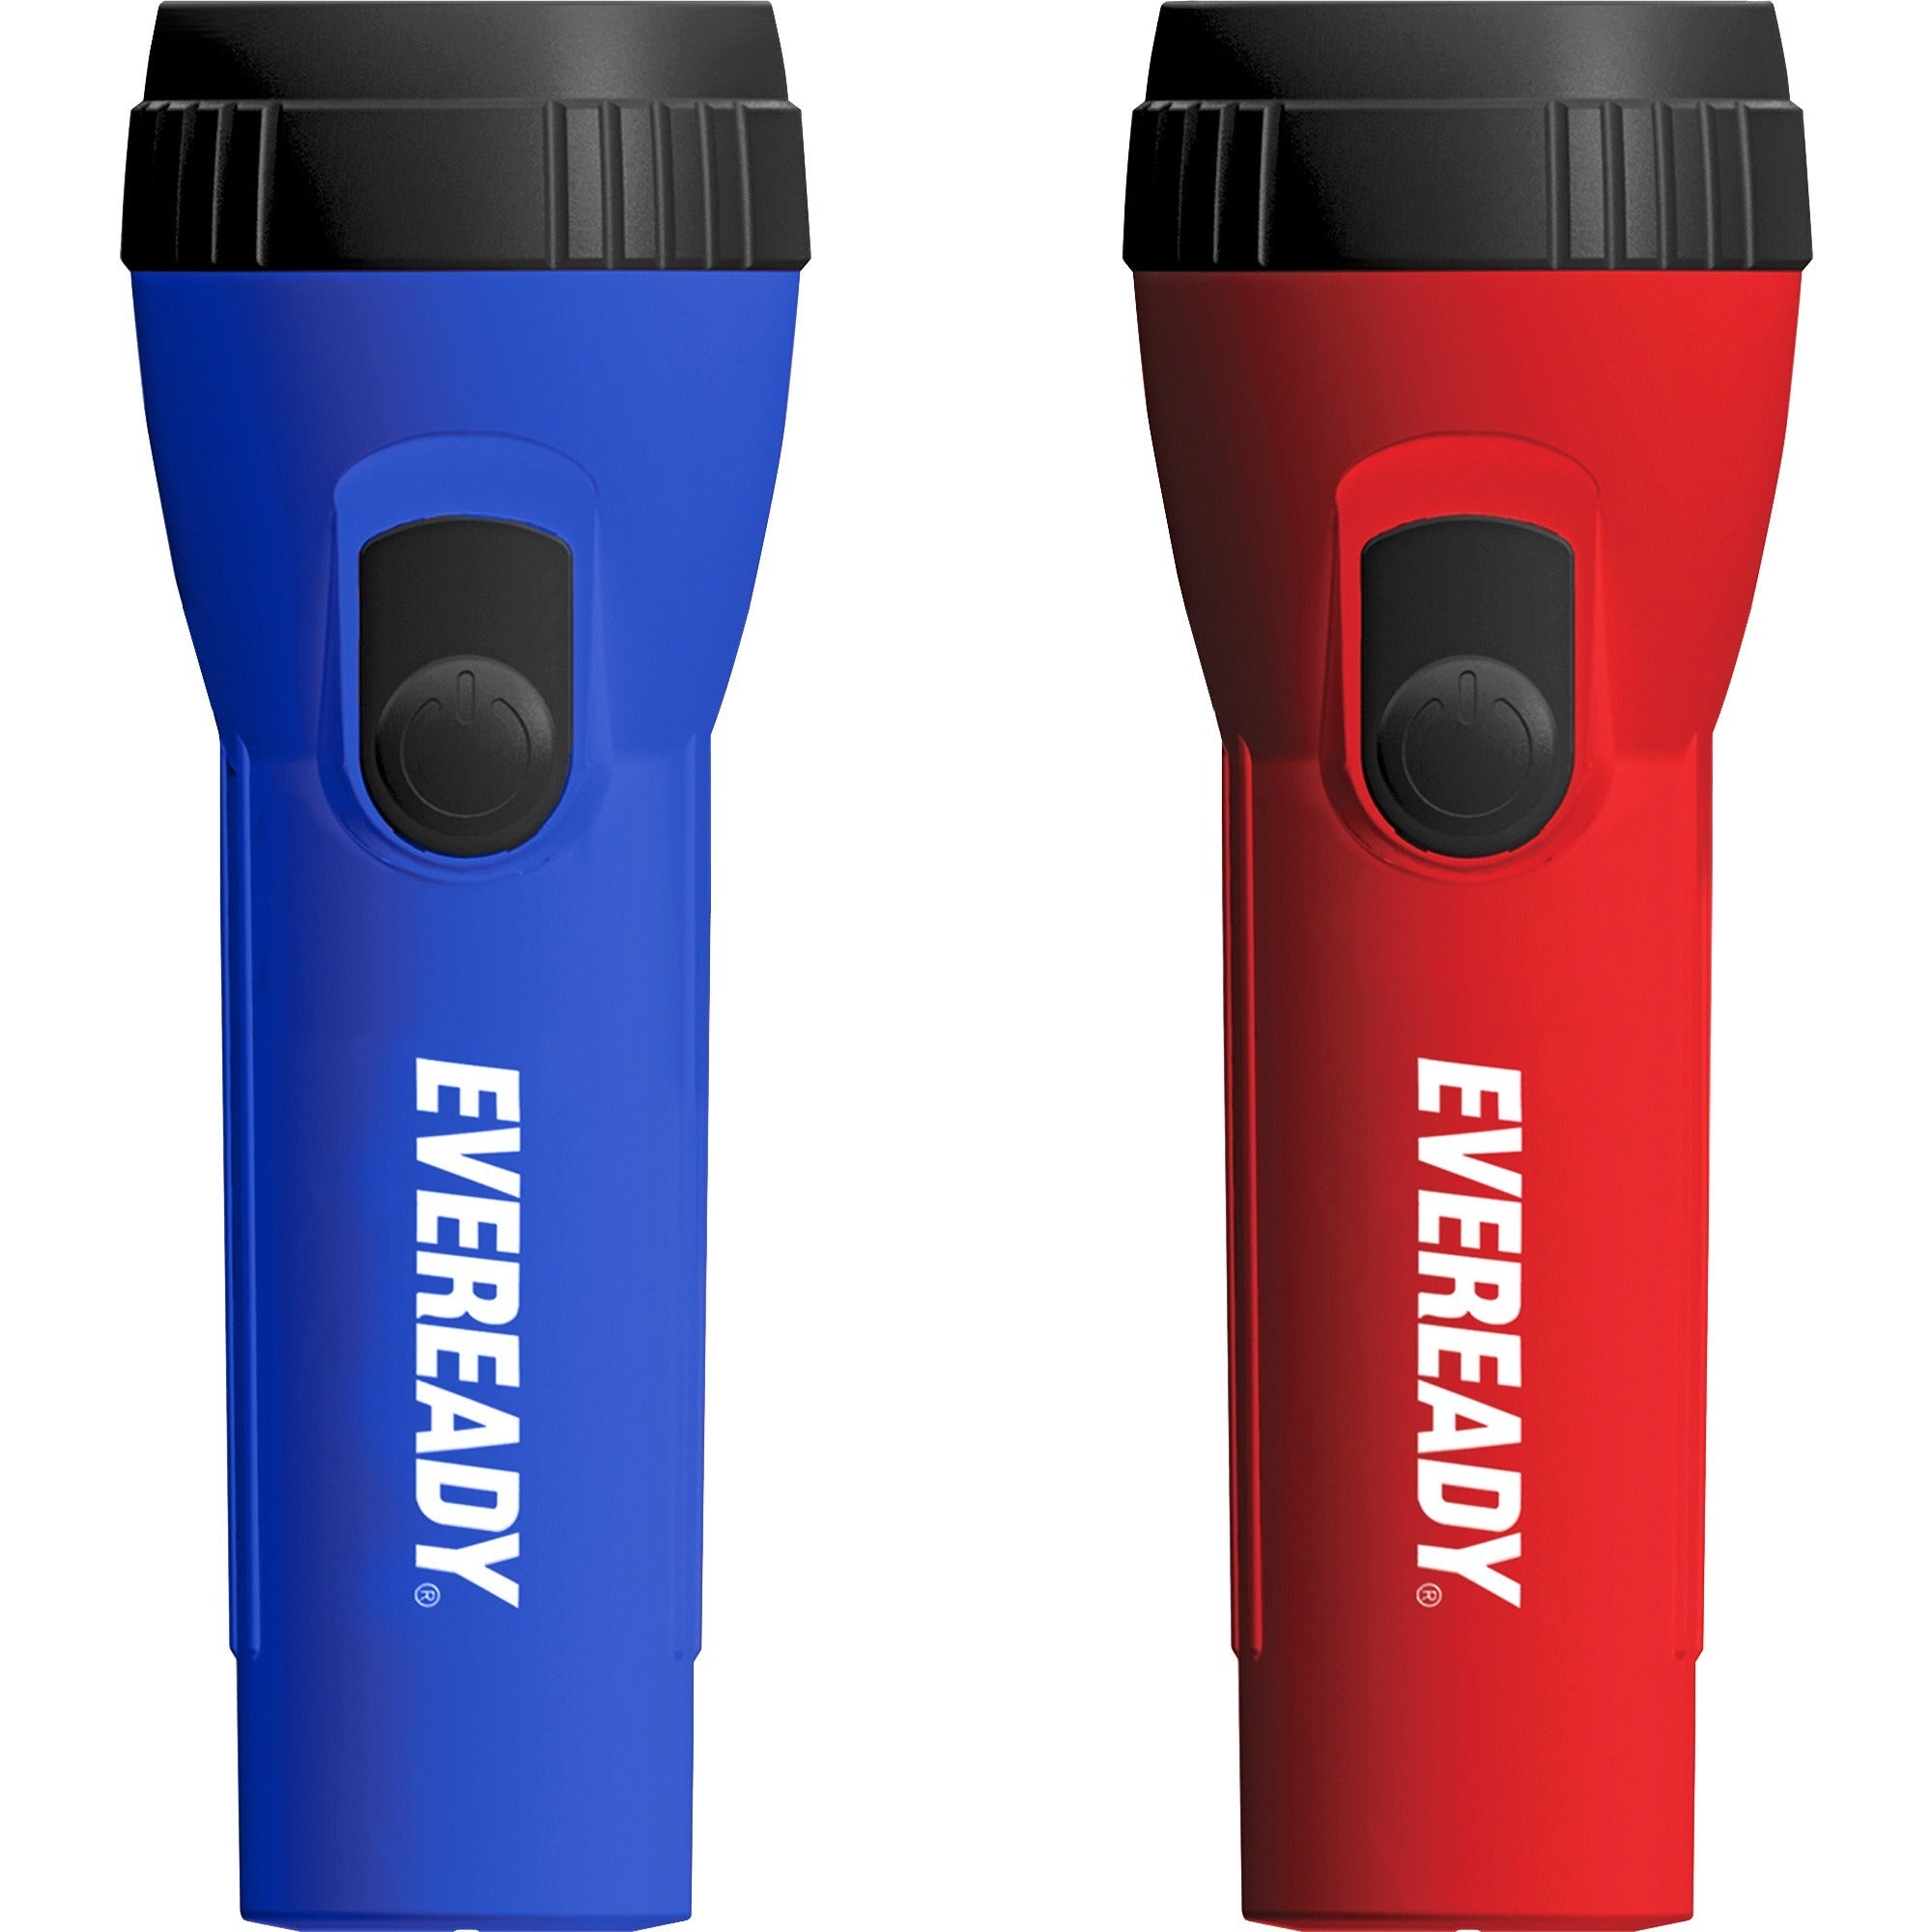 eveready-led-economy-flashlight-led-bright-white-25-lm-lumen-1-x-d-alkaline-battery-polypropylene-assorted_evel15hs - 1